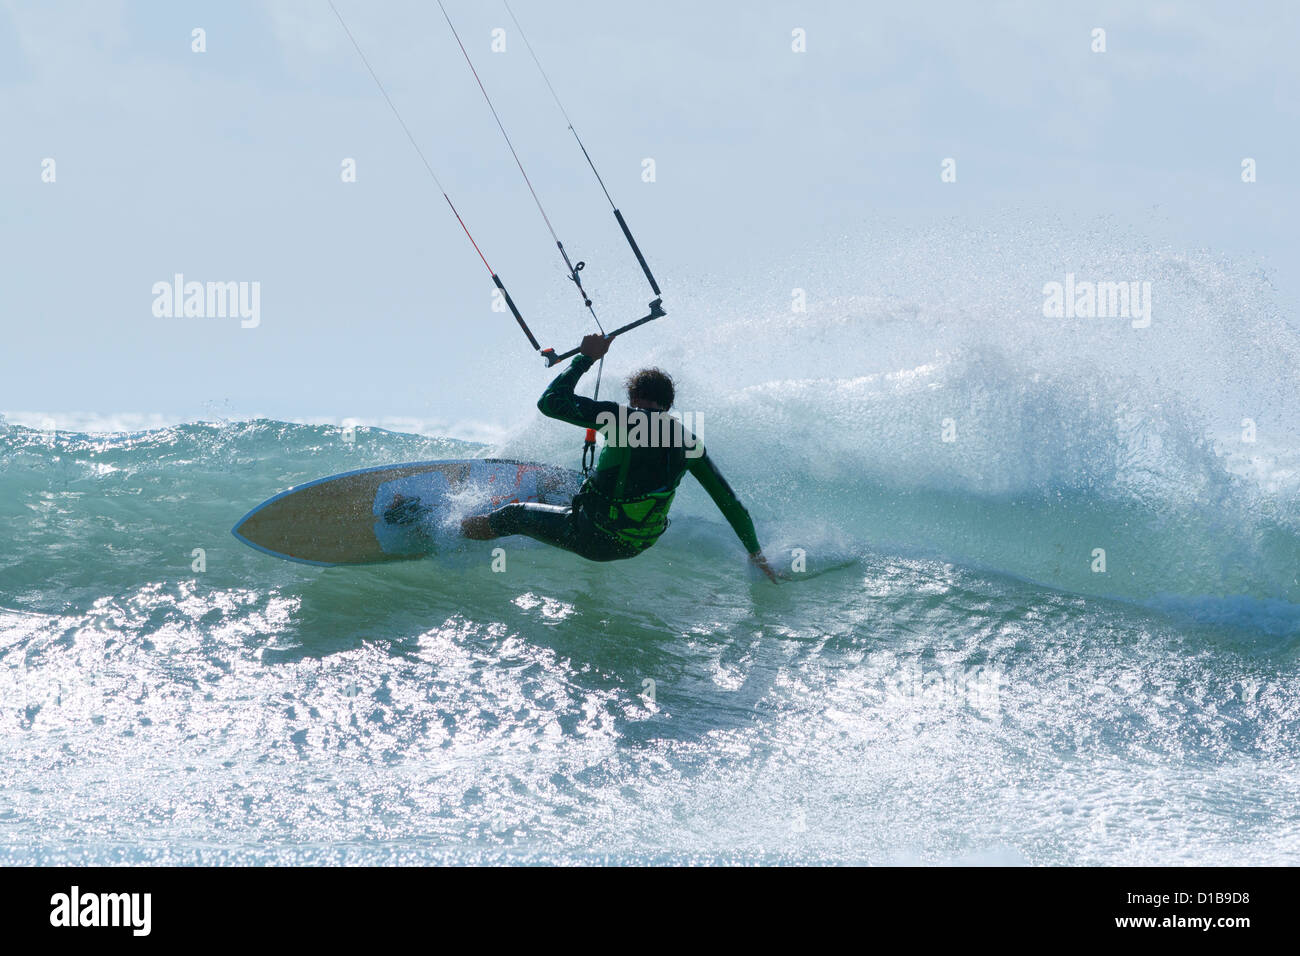 Kitesurfer slashing a wave. Tarifa, Costa de la Luz, Cadiz, Andalusia, Spain. Stock Photo